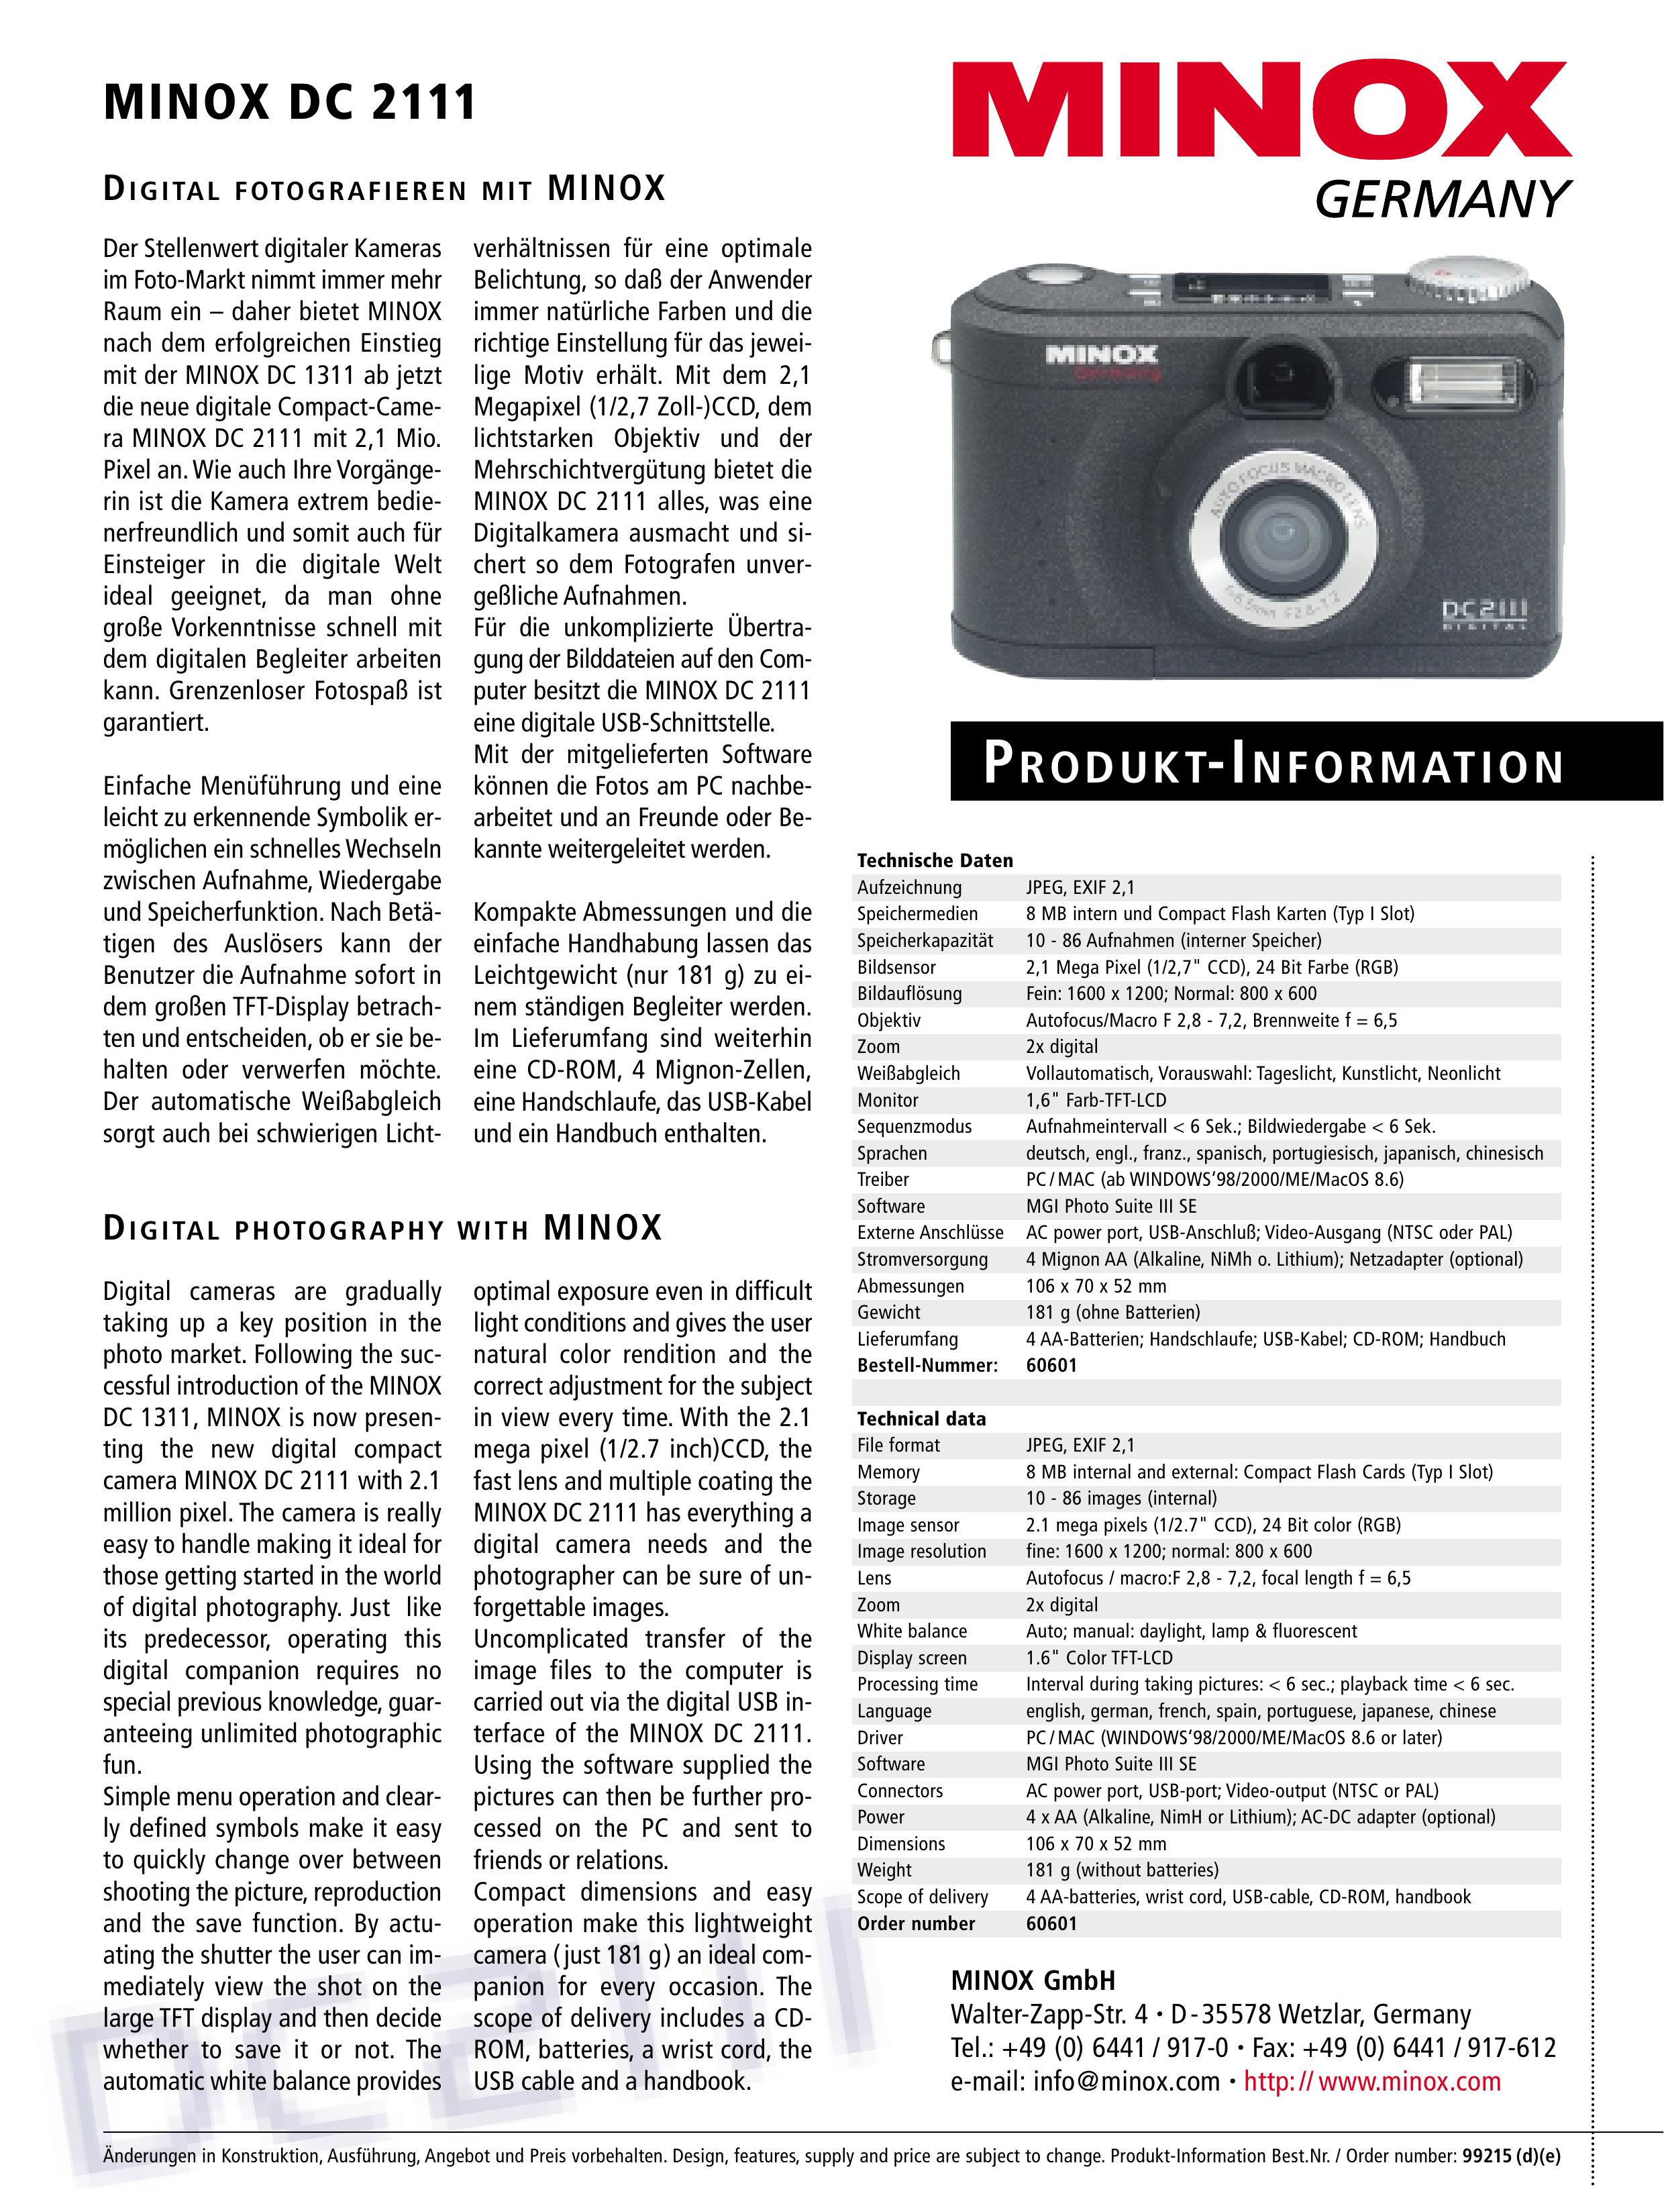 Minox MINOX DC 2111 Digital Camera User Manual